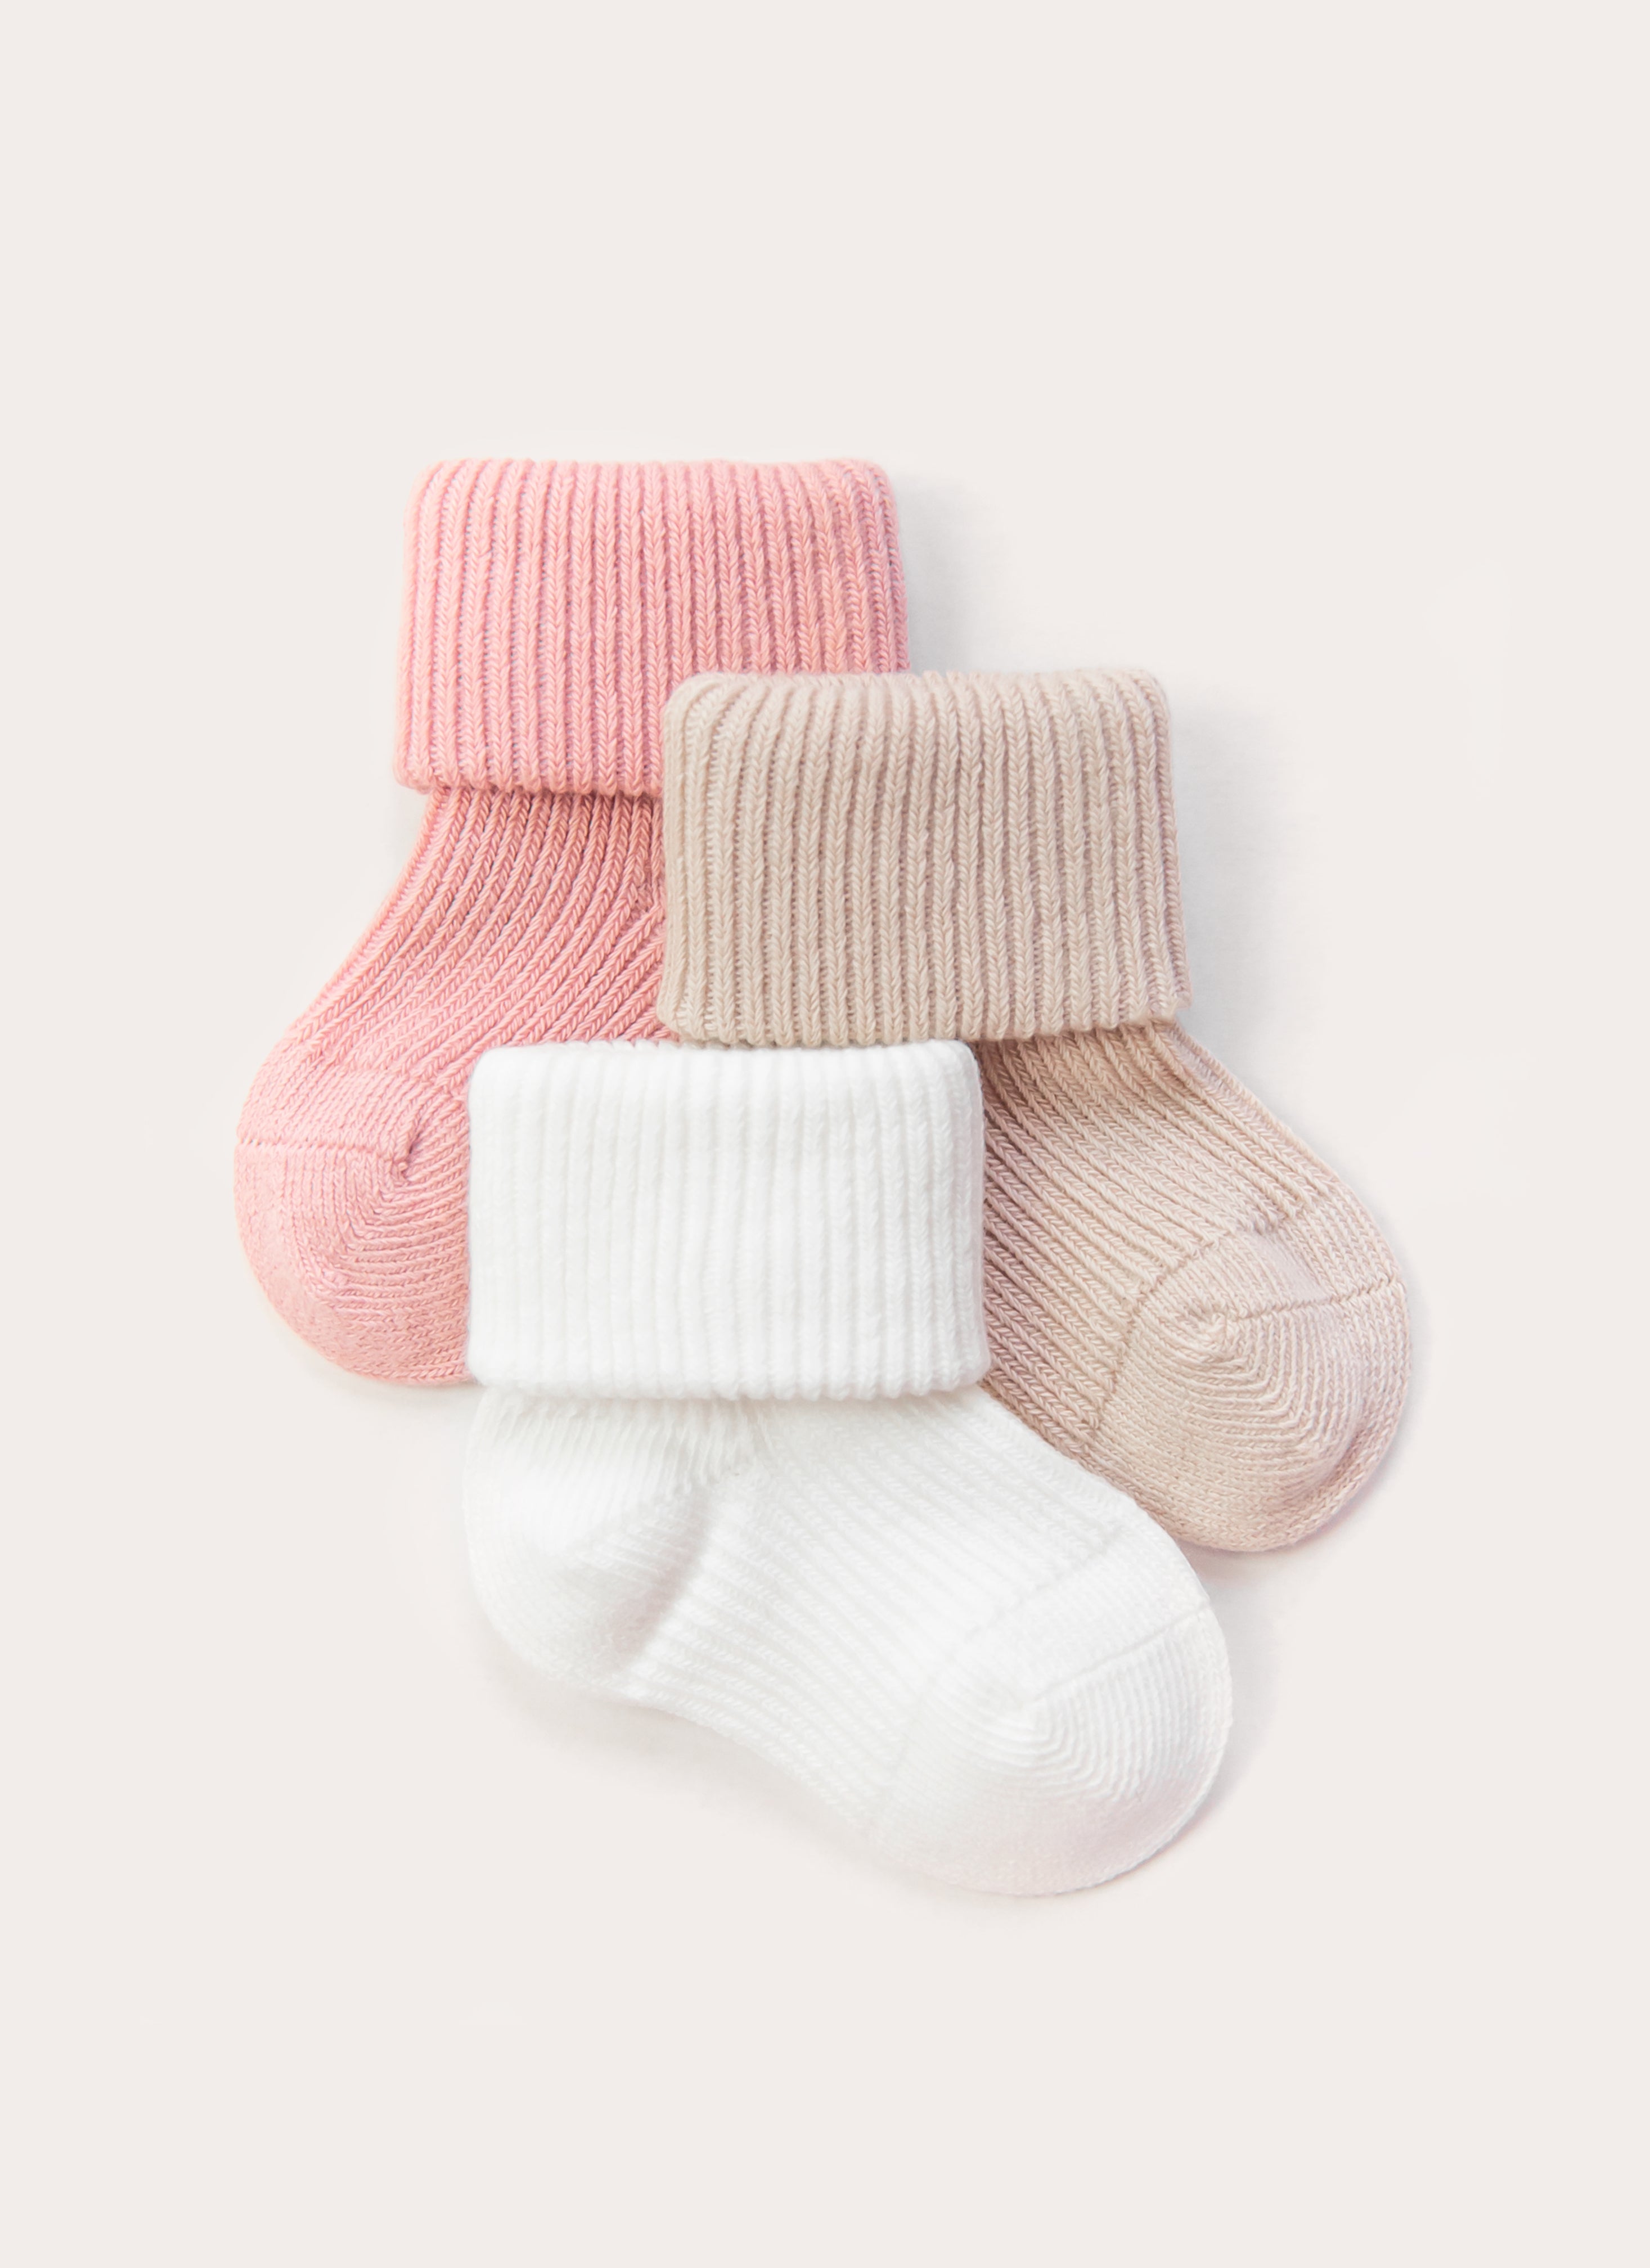 Soft Cotton Socks 3PC/Set (Pink, Nude, White)